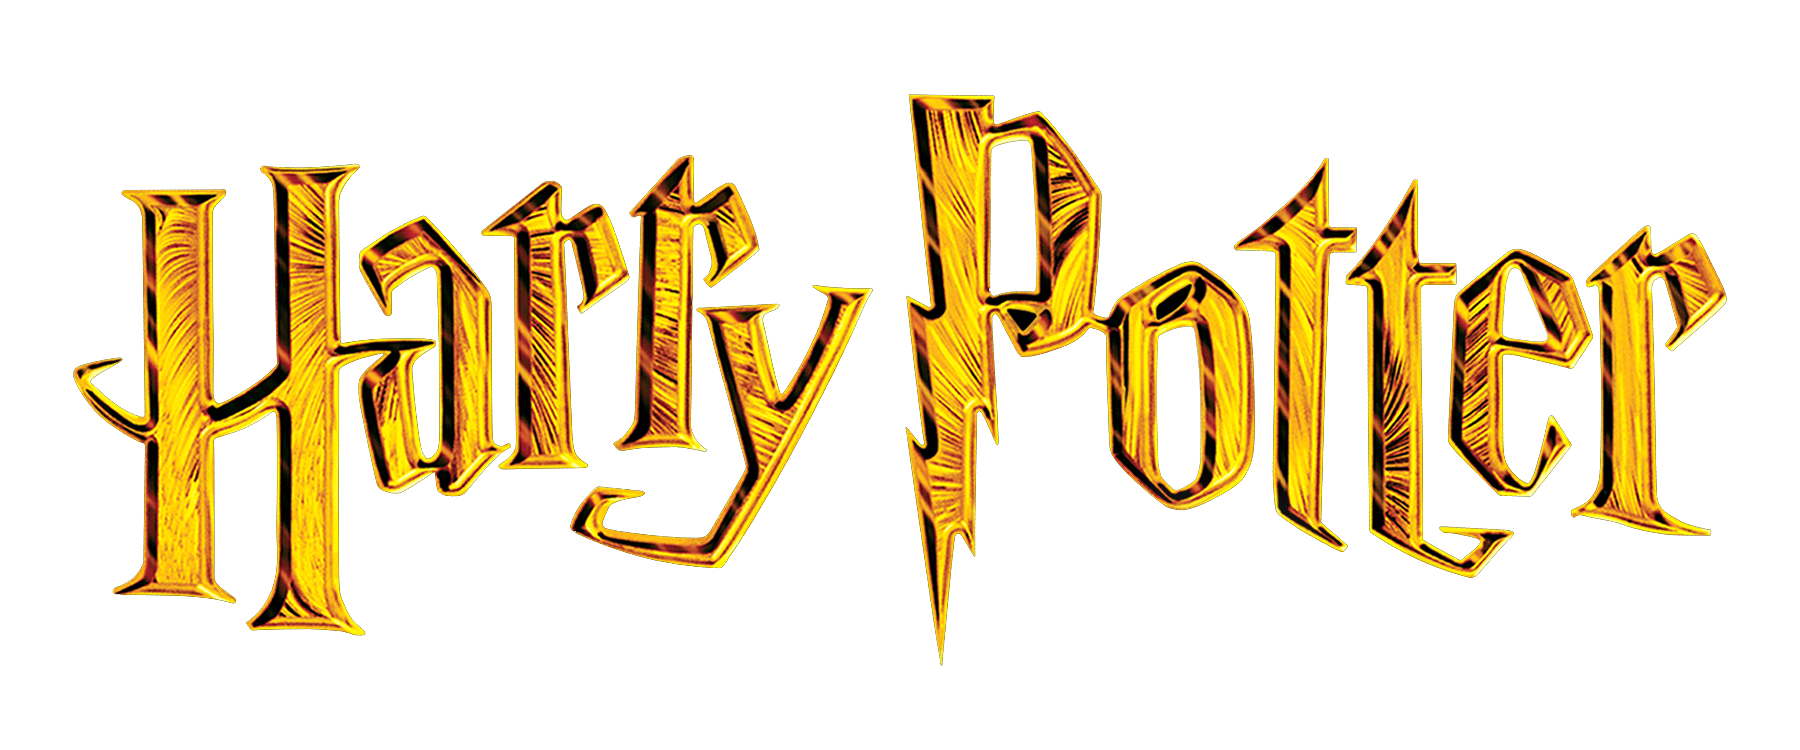 Pop! Harry Potter - Luna Lovegood - #47